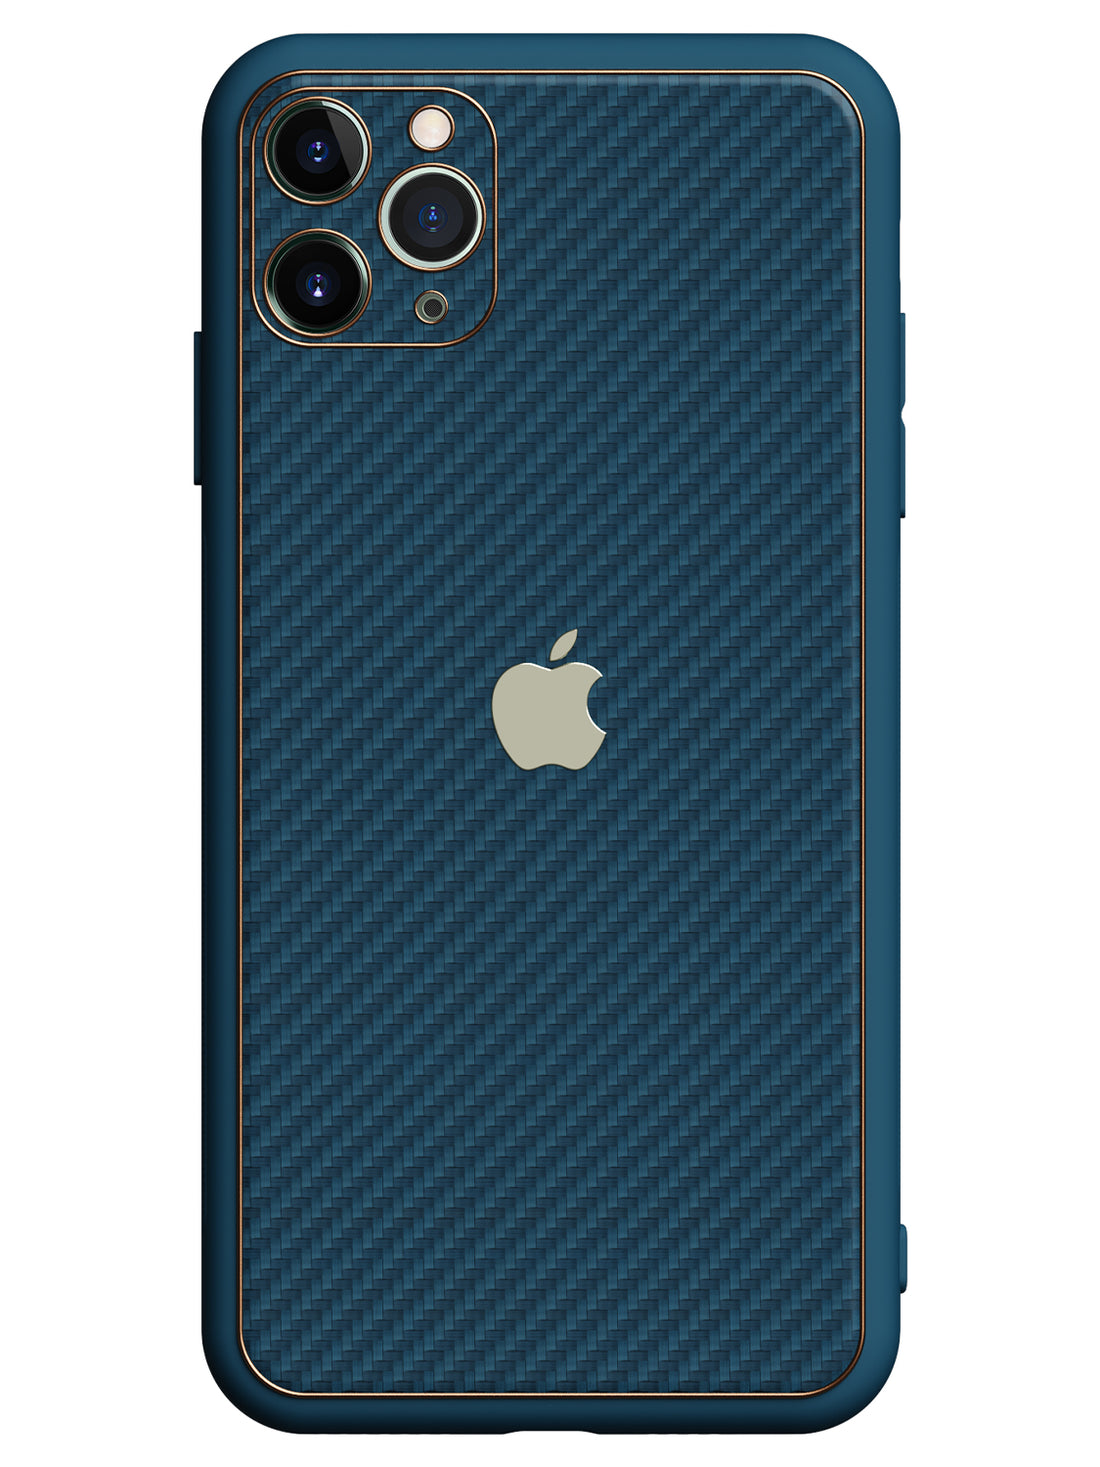 Carbon Leather Chrome Case - iPhone 11 Pro Max (Navy Blue)